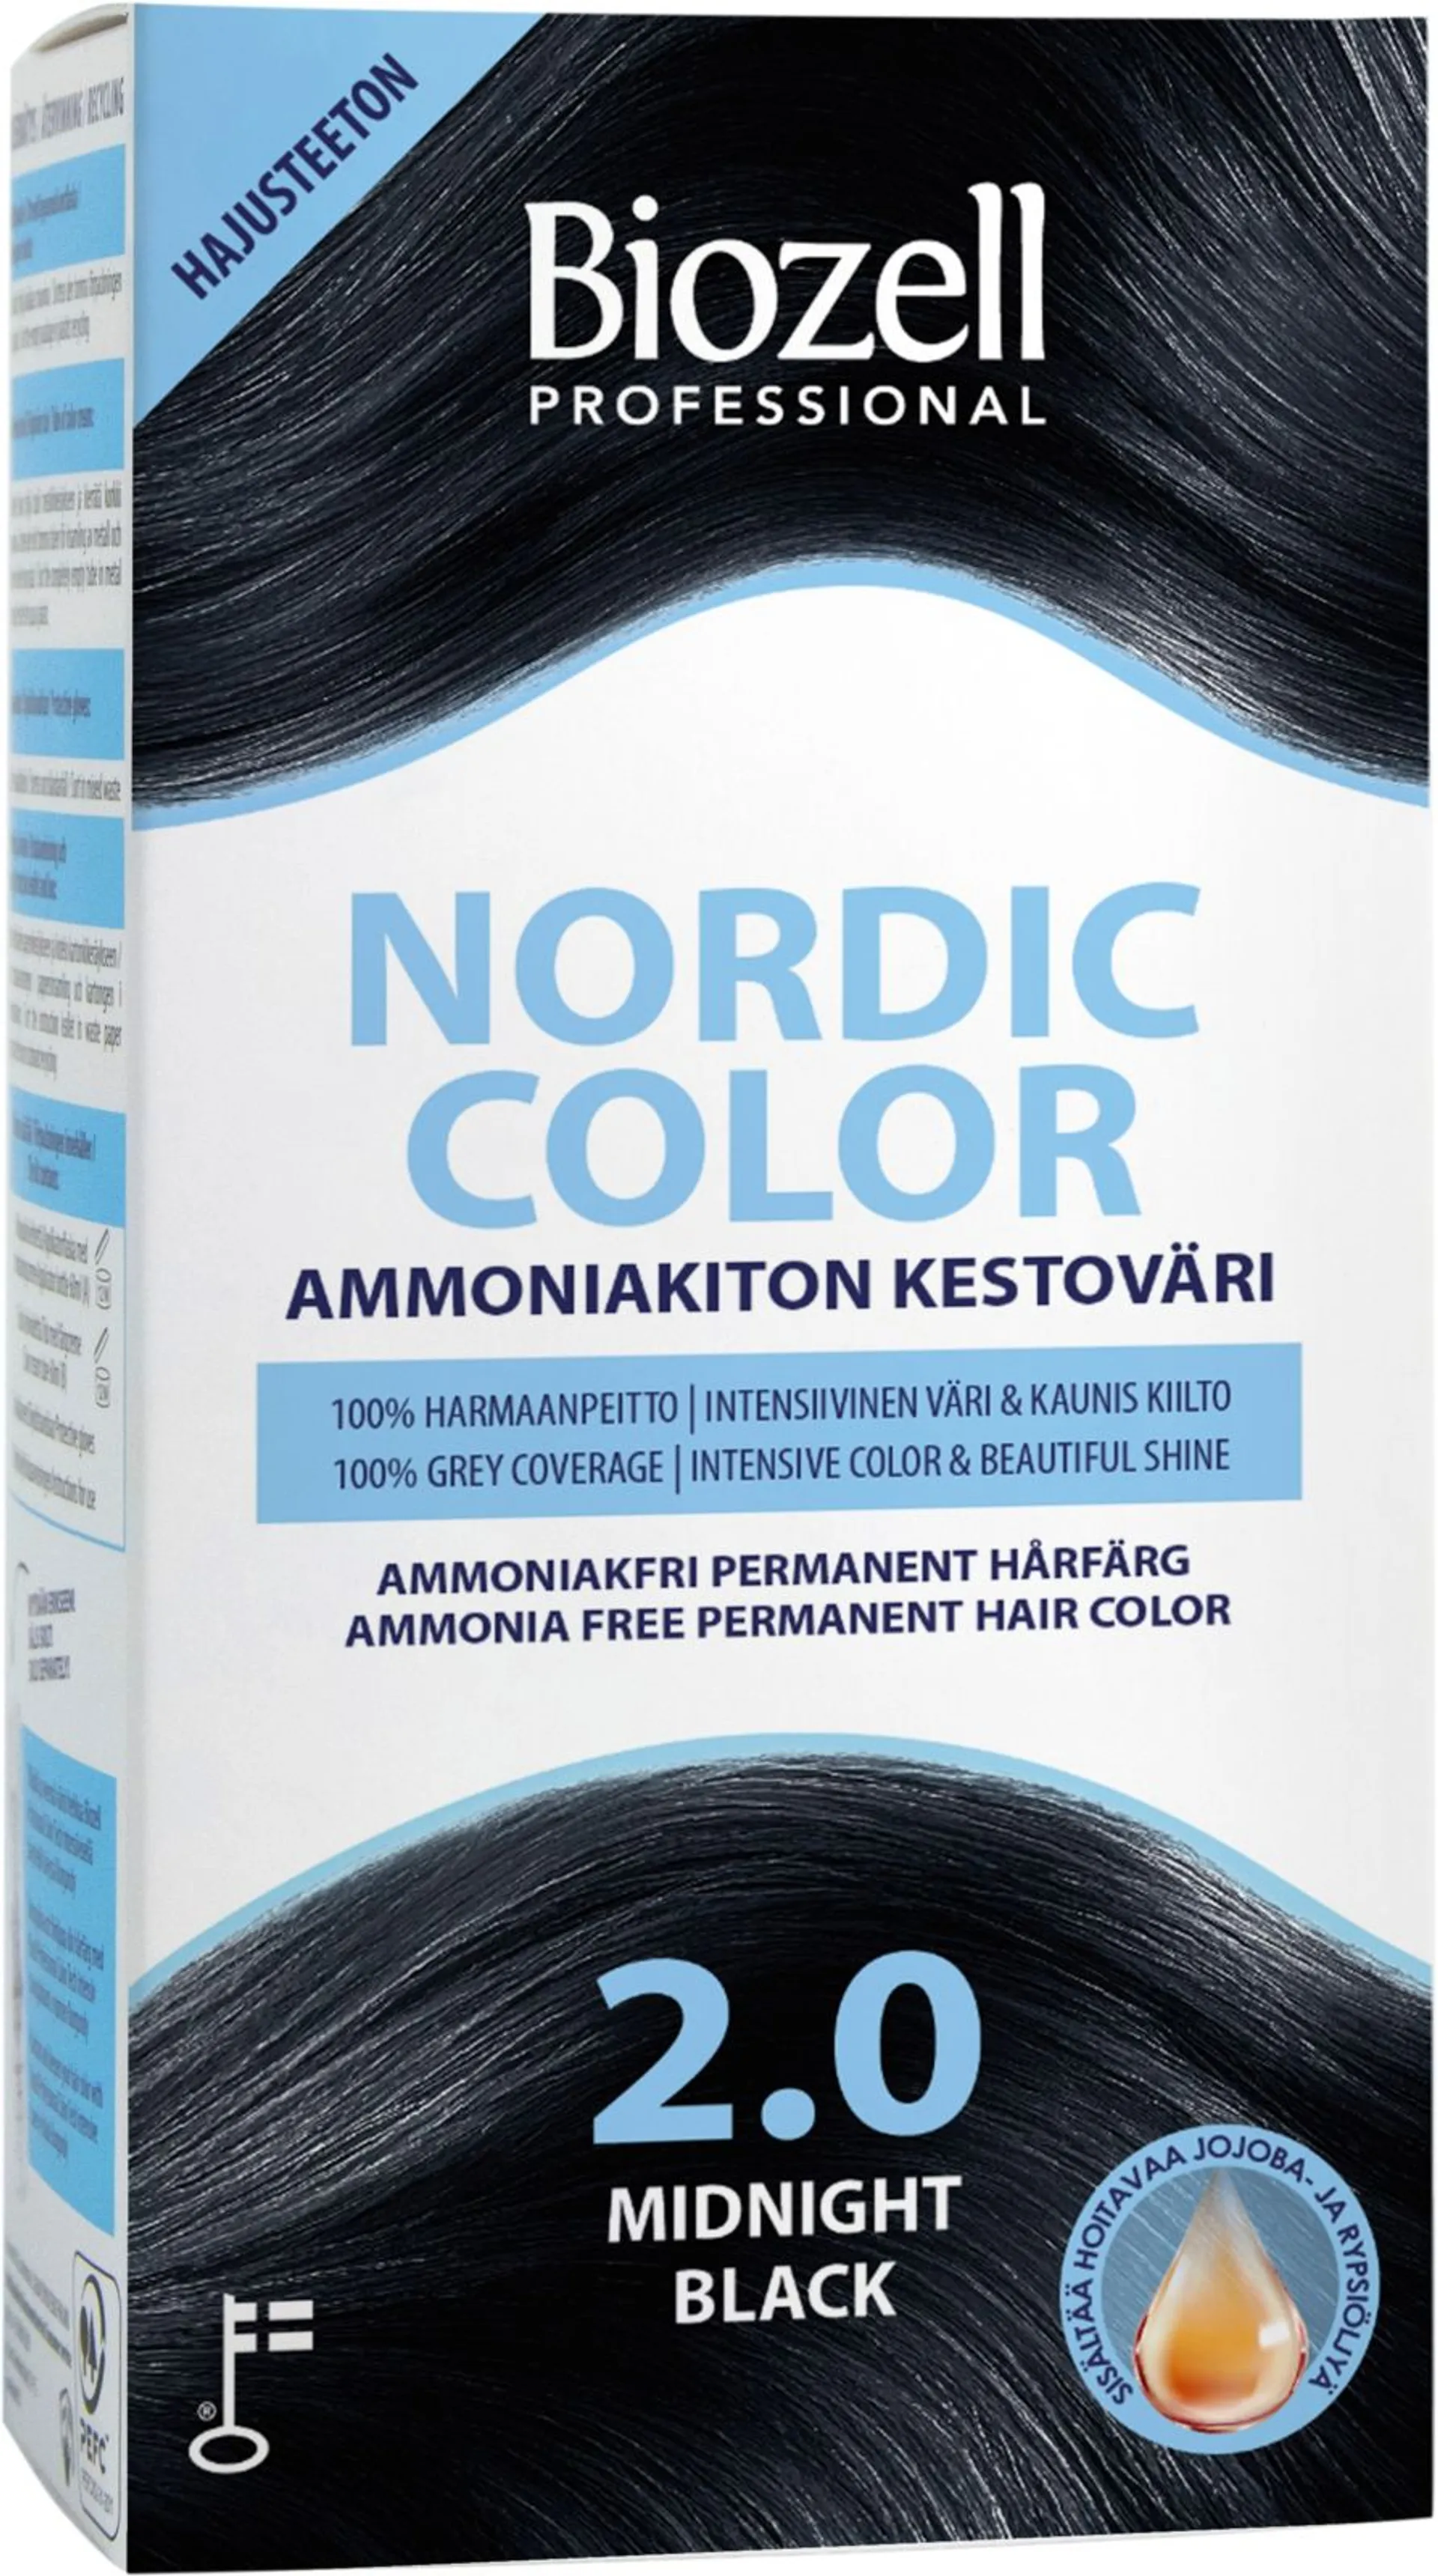 Biozell Professional Nordic Color ammoniakiton kestoväri Midnight Black 2.0 2x60ml